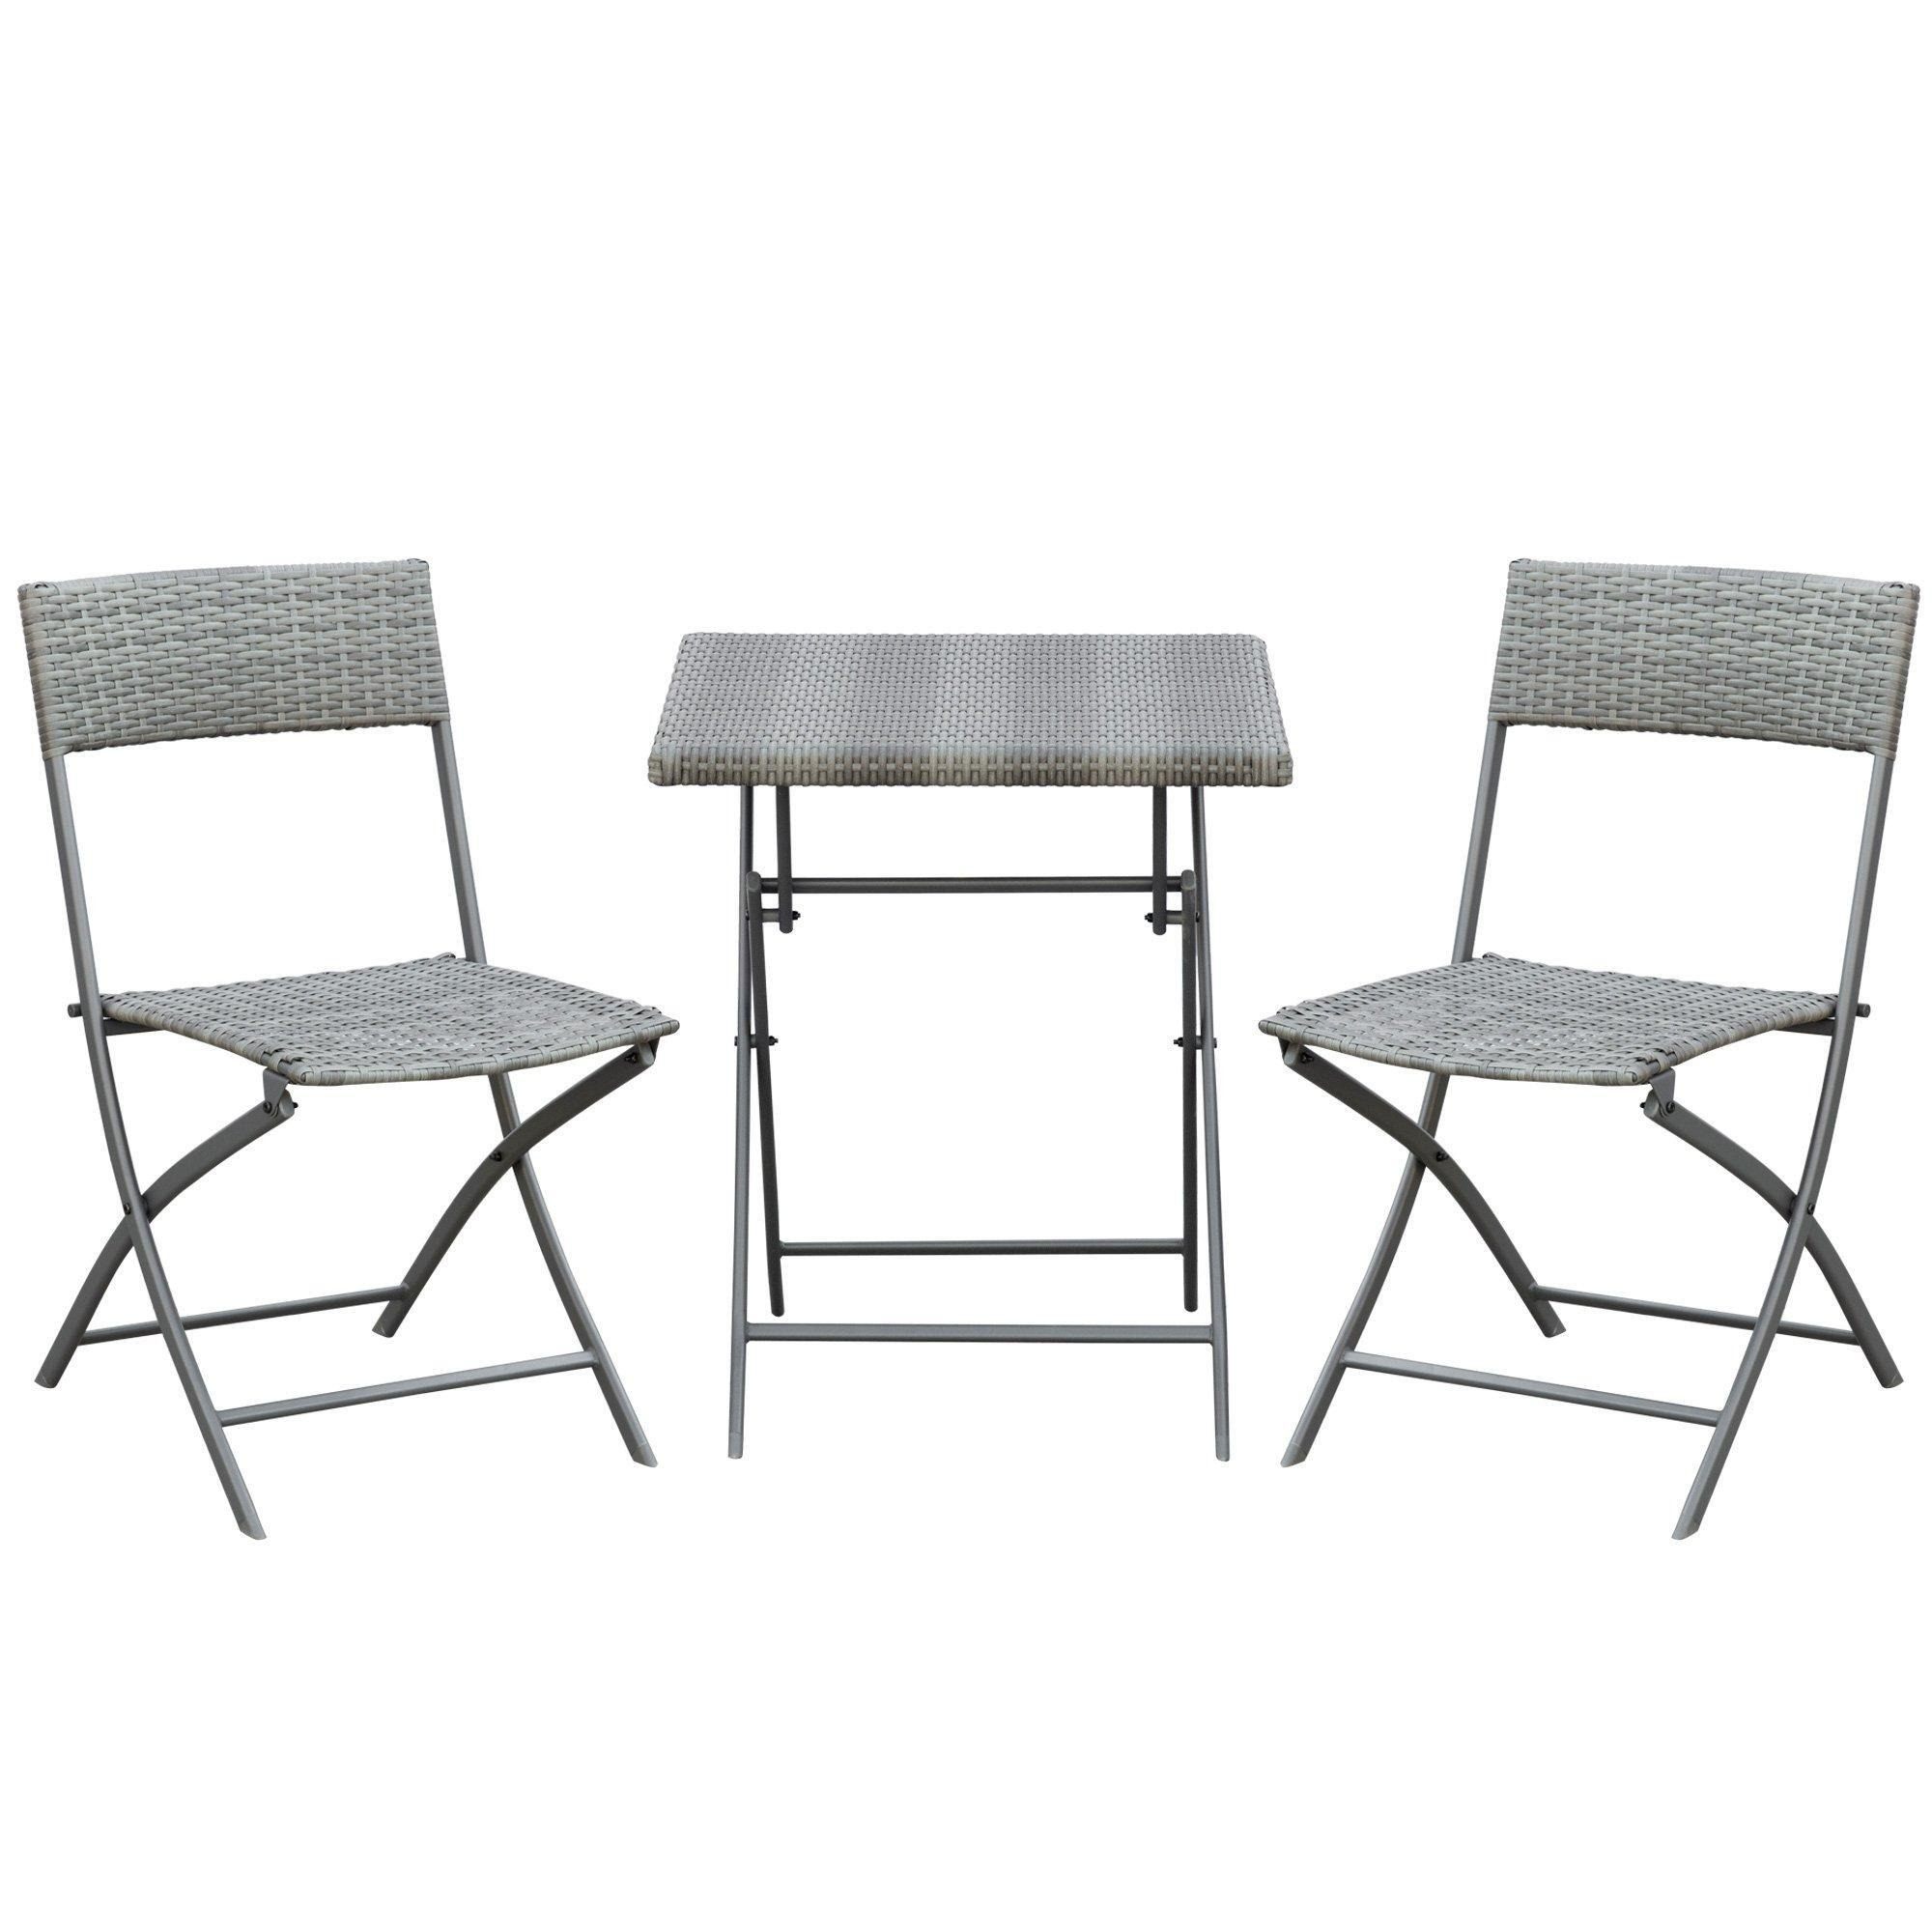 3 PCS Chair Bistro Set Garden Patio Table & Chair Black Rattan Furniture - image 1